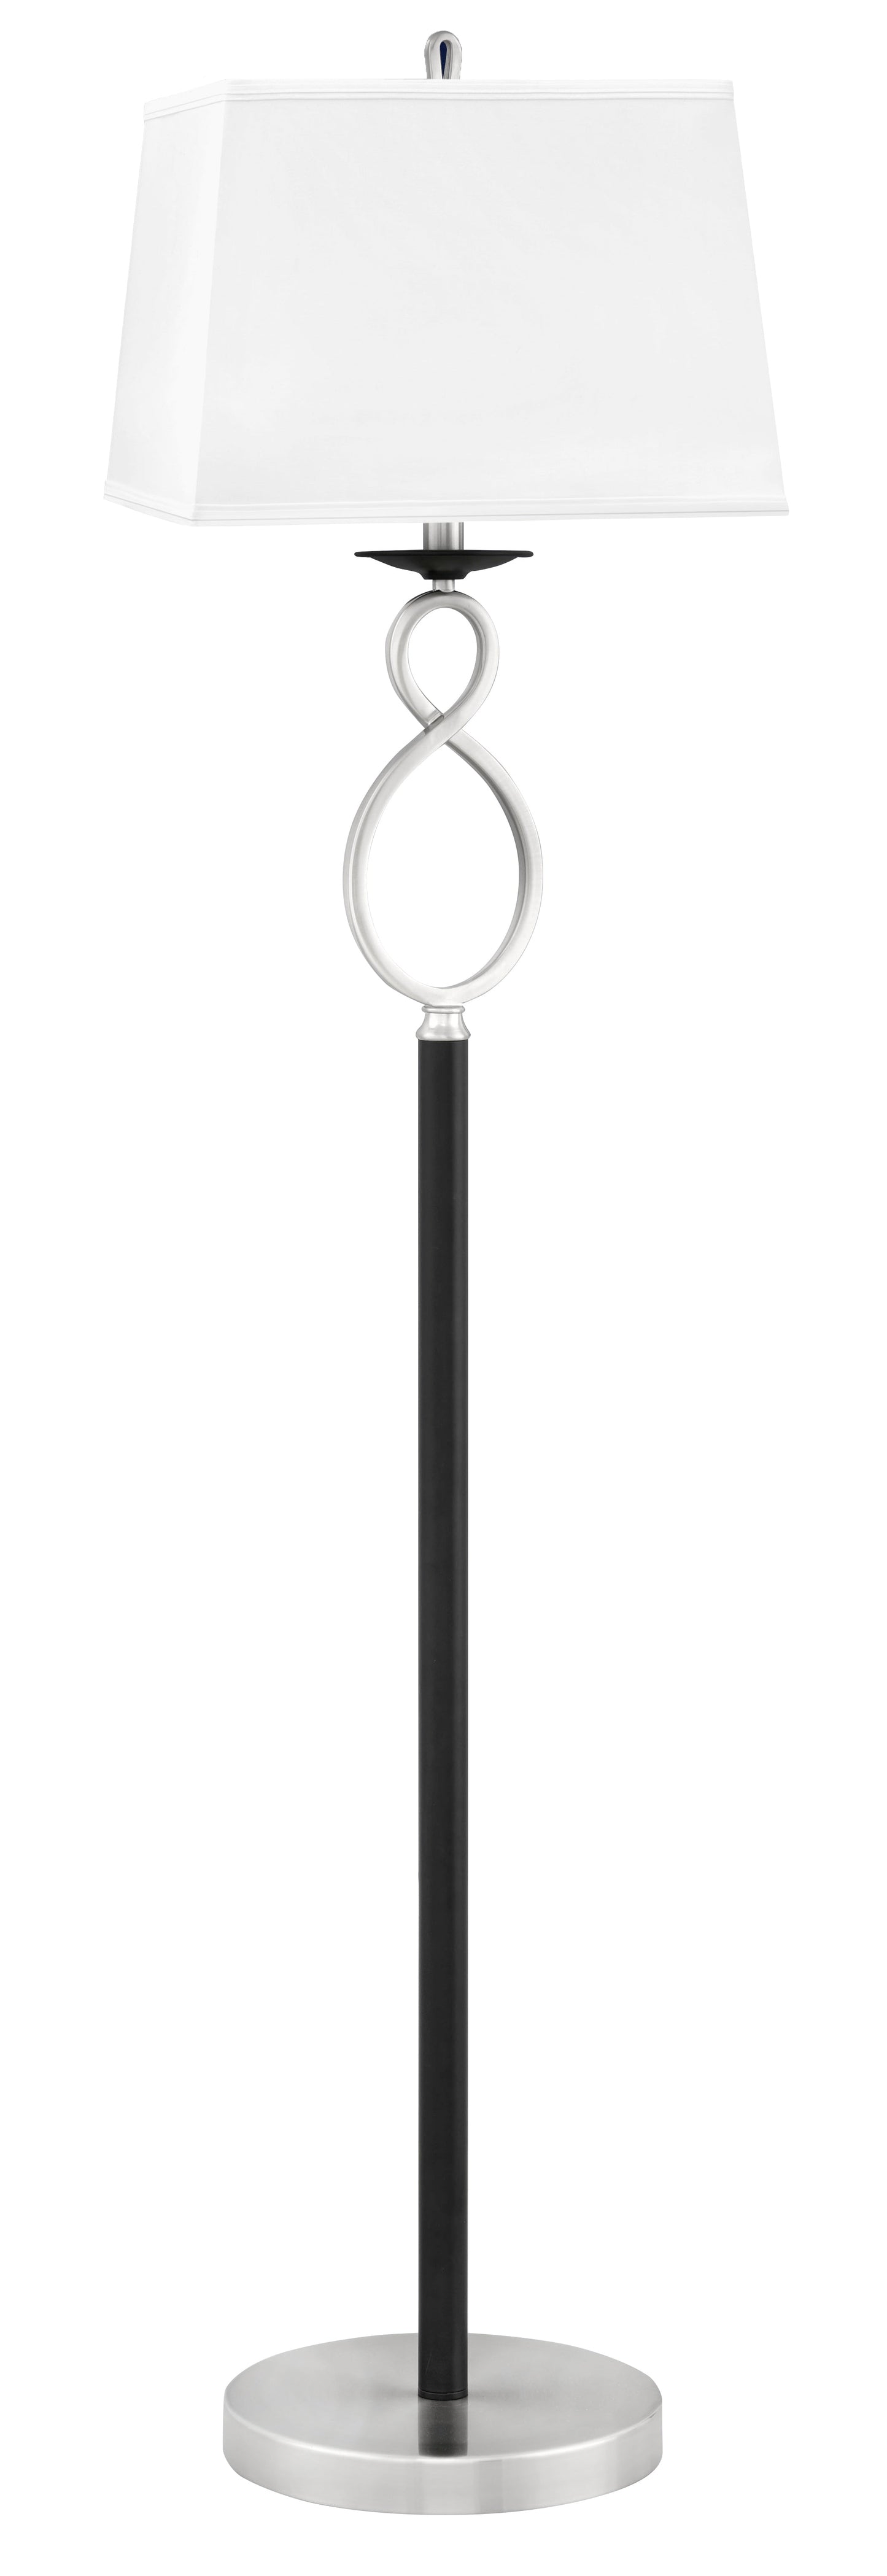 Medallion Lighting Figure 8 60" Brushed Steel/Black Floor Lamp With White Fabric Drum Shade